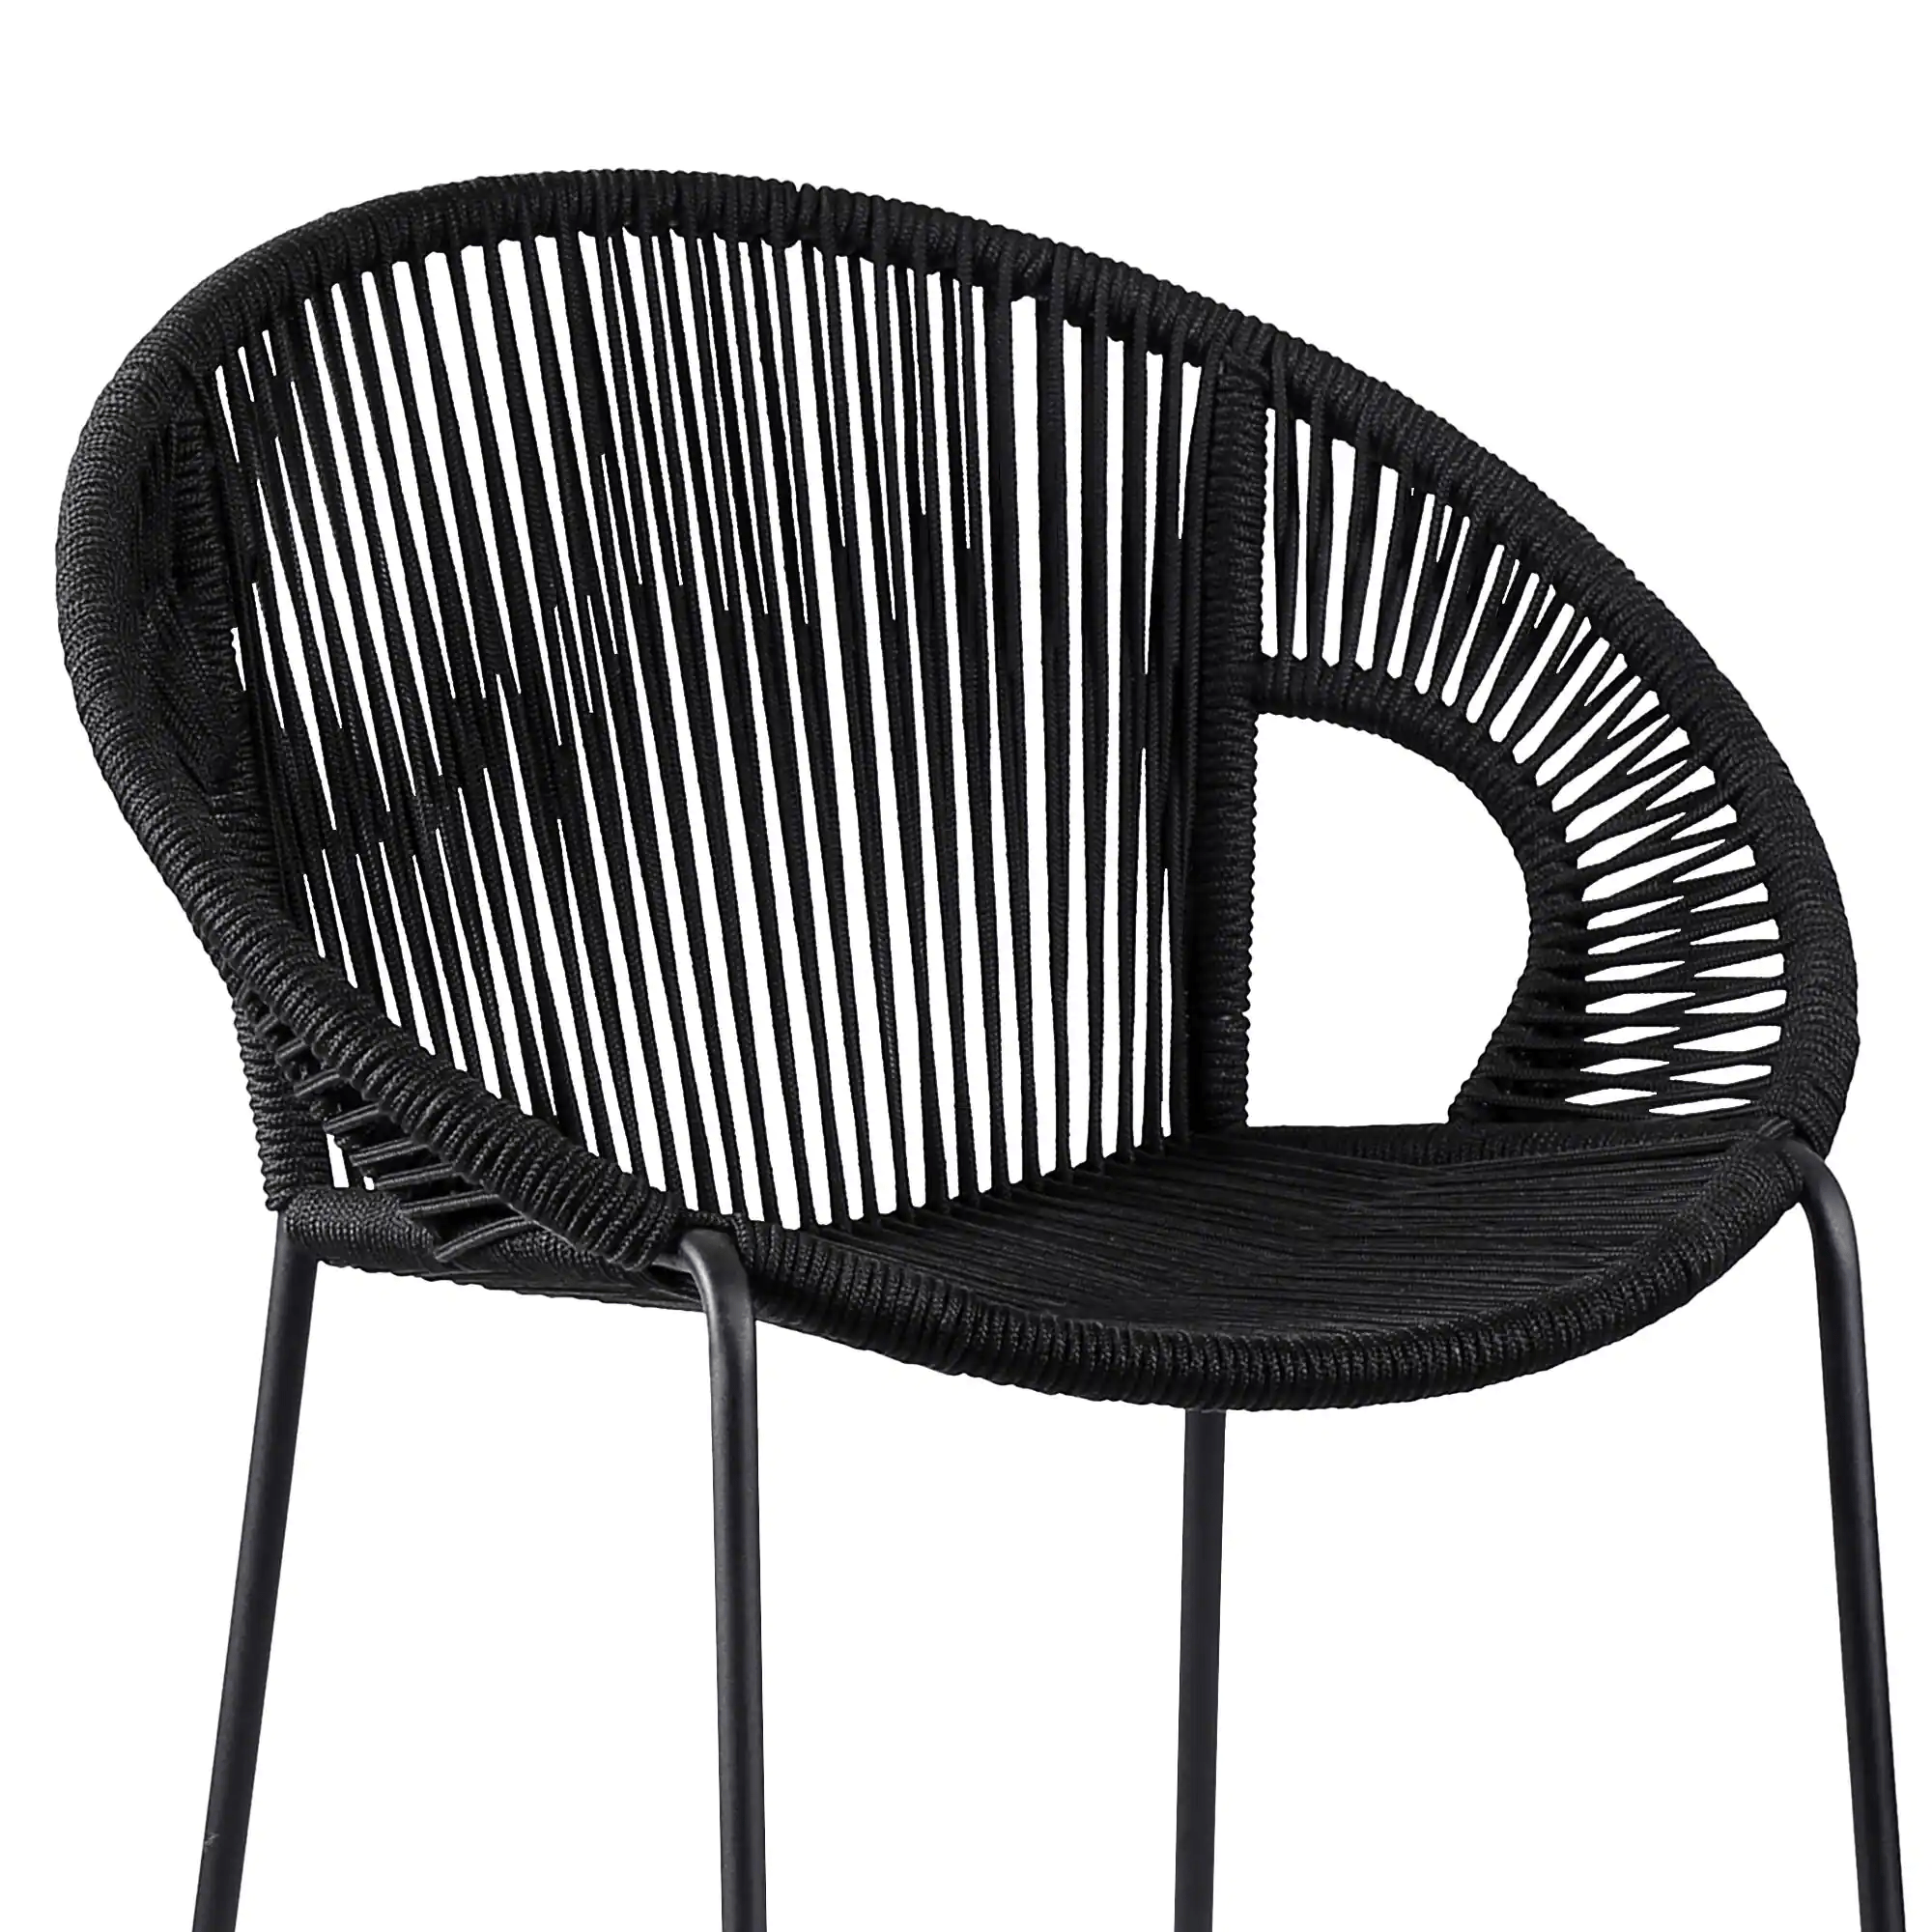 Dreamline Outdoor Bar Chair/Garden Patio Bar Stool - One Chair (Black)